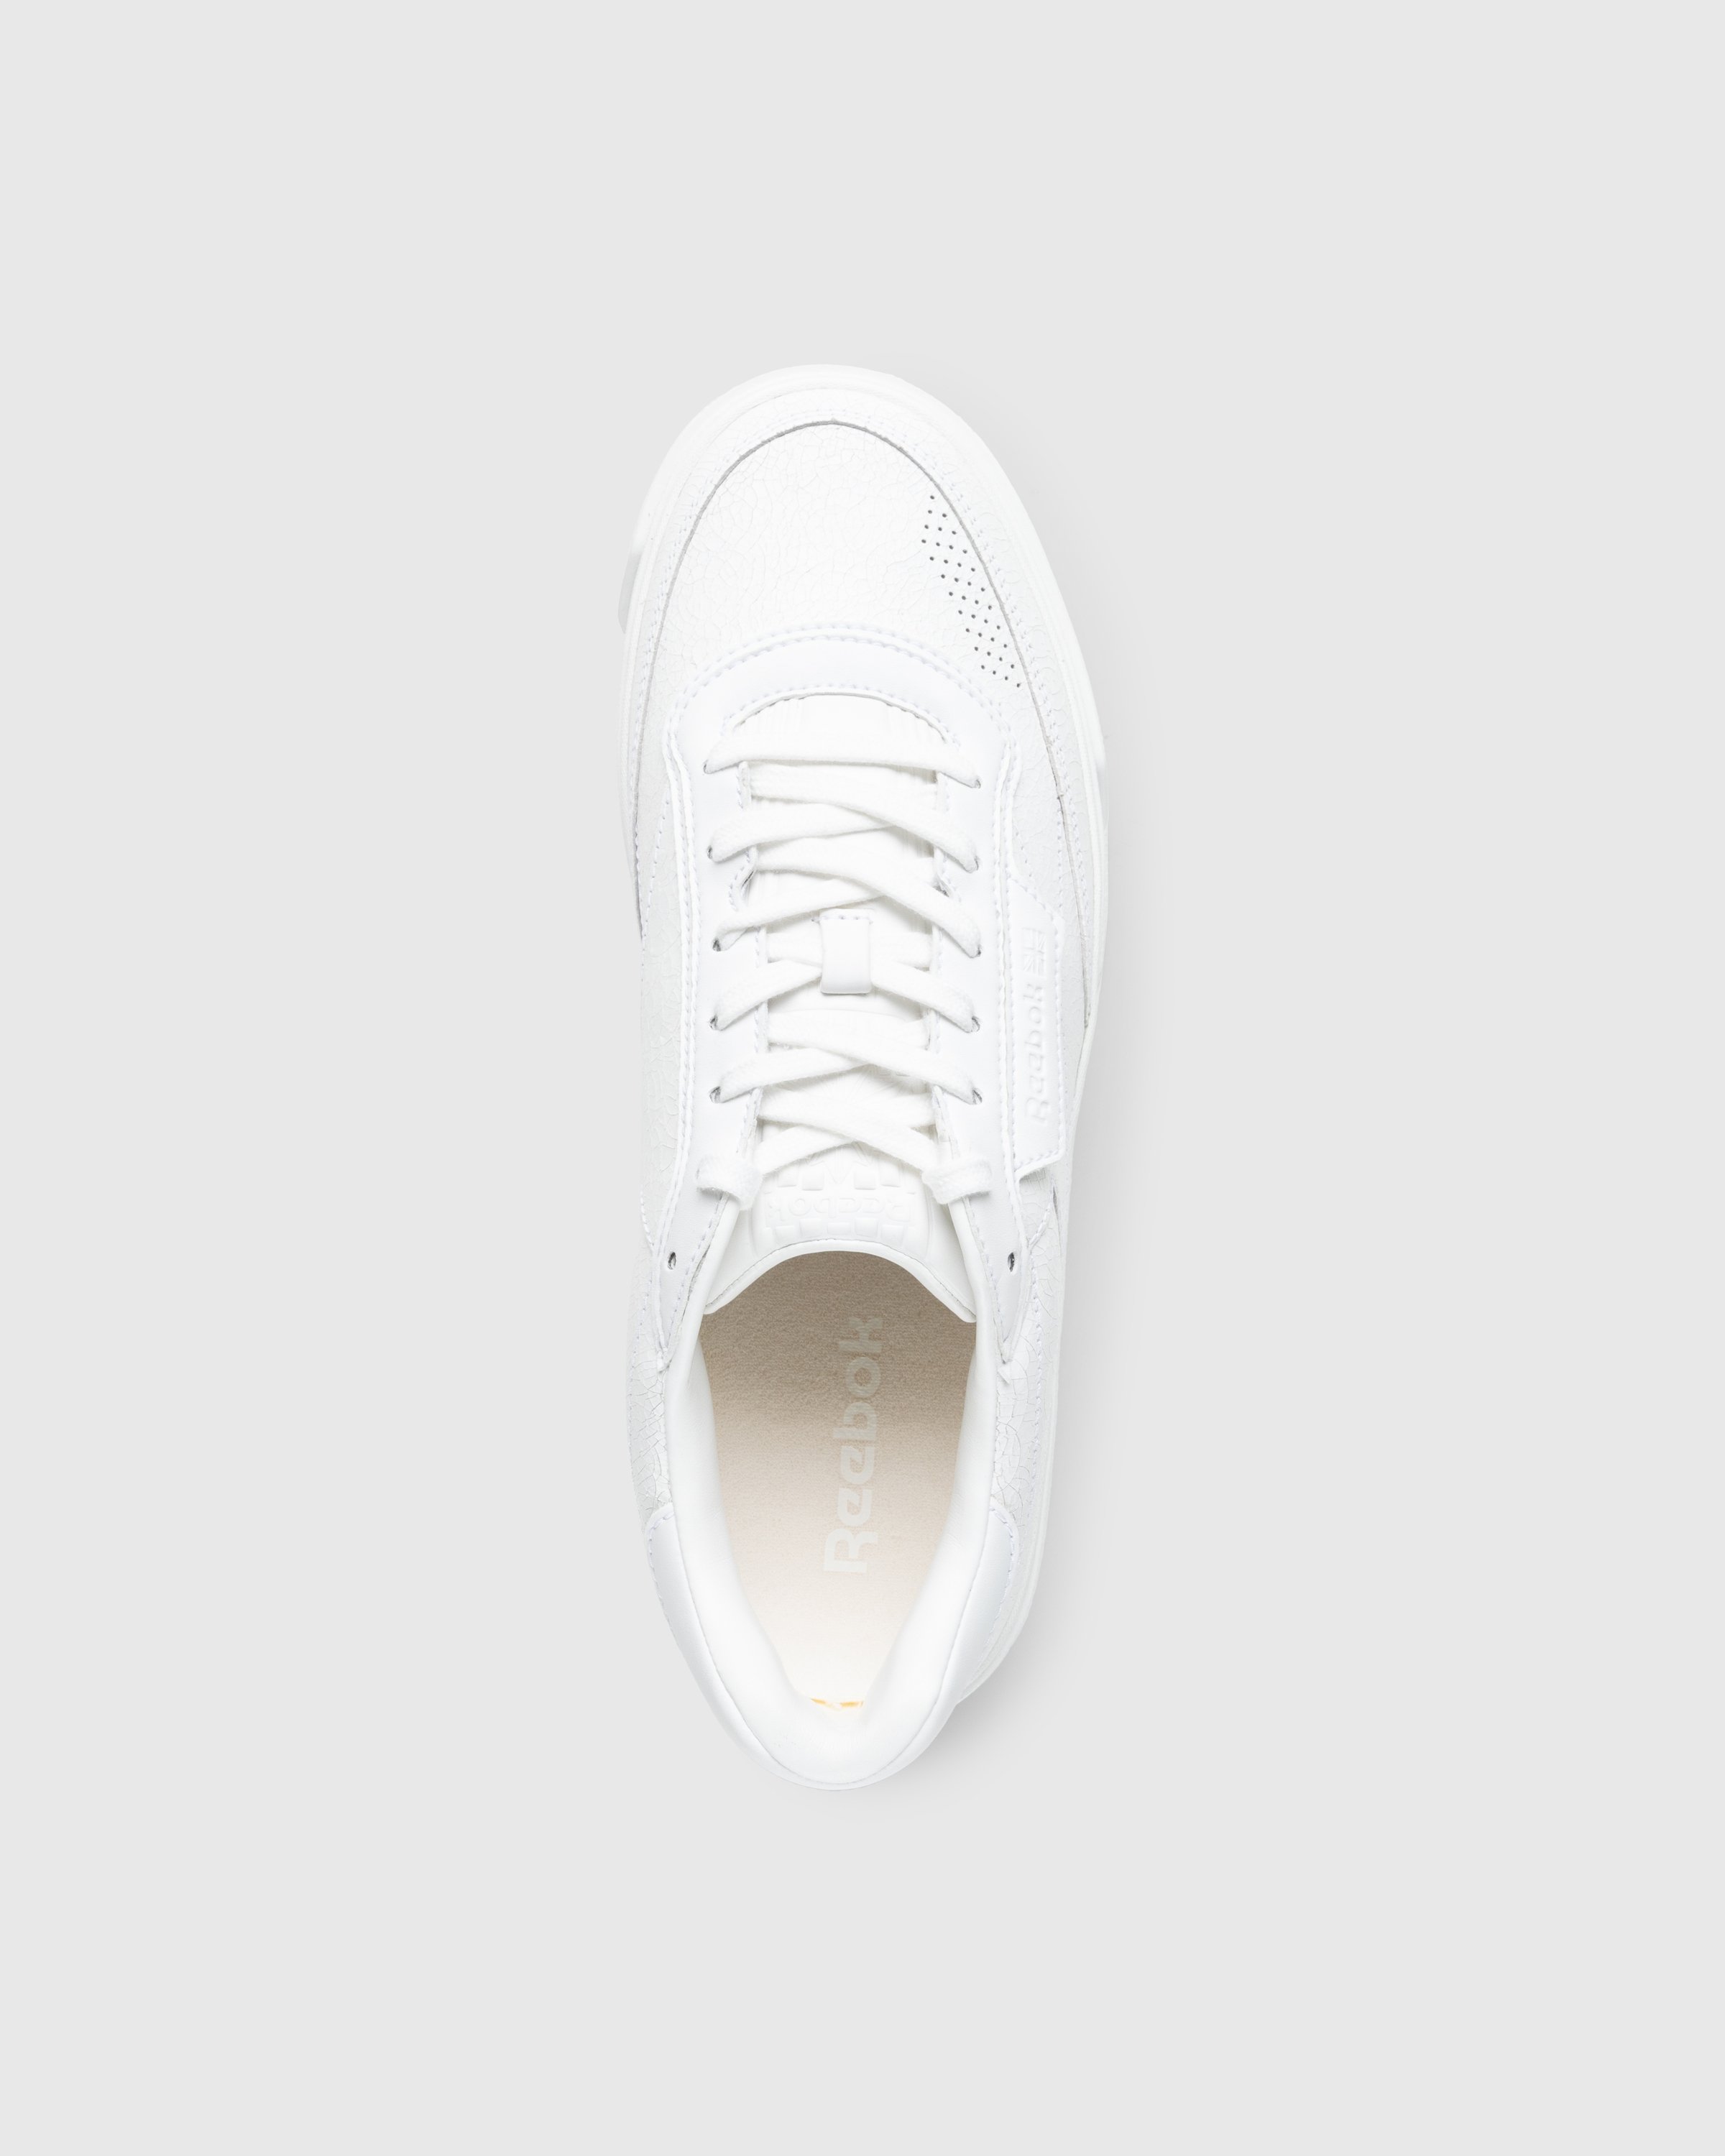 Reebok - Club C Ltd Cracked White White - Footwear - White - Image 5